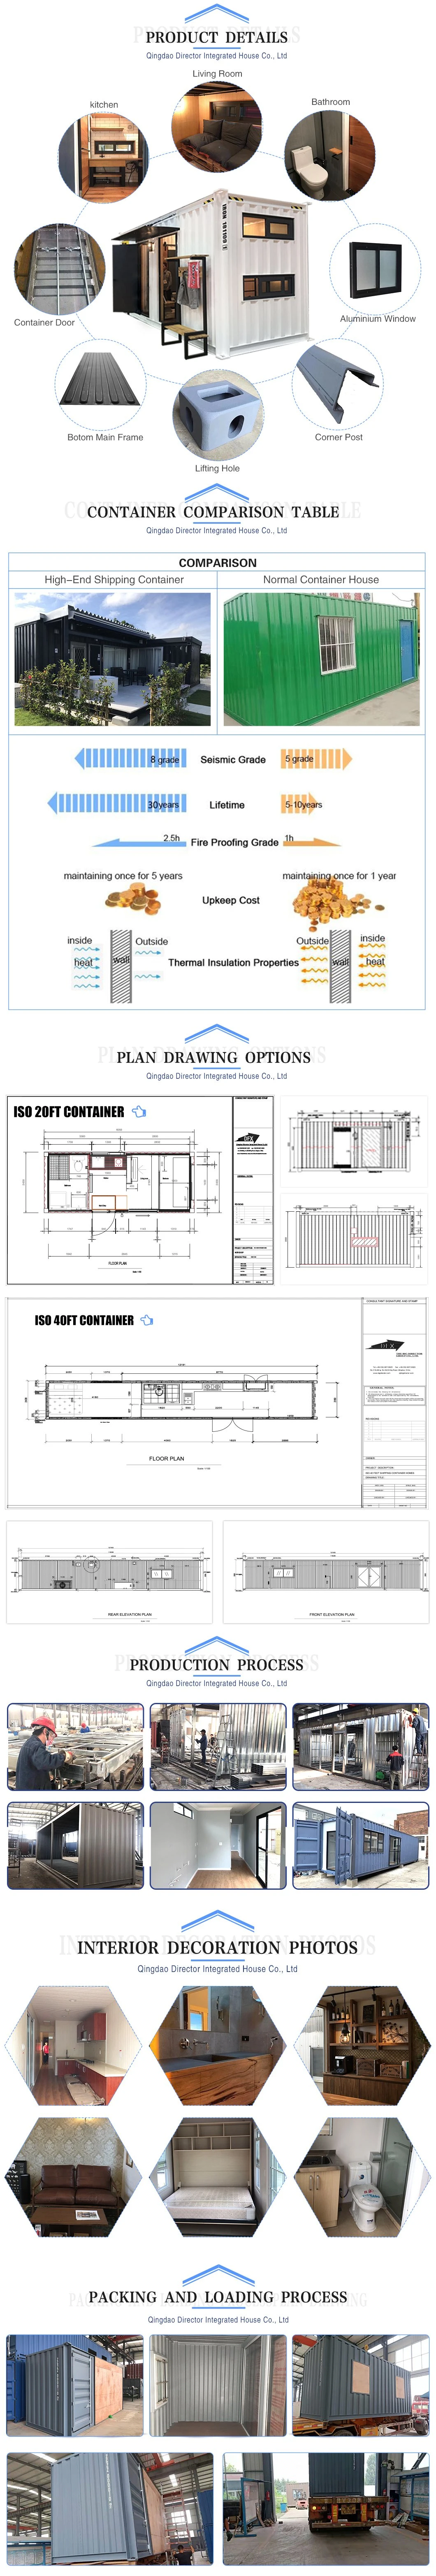 Dfx Hot Sale Duplex Loft Style Modular Prefabricated Prefab Container Home